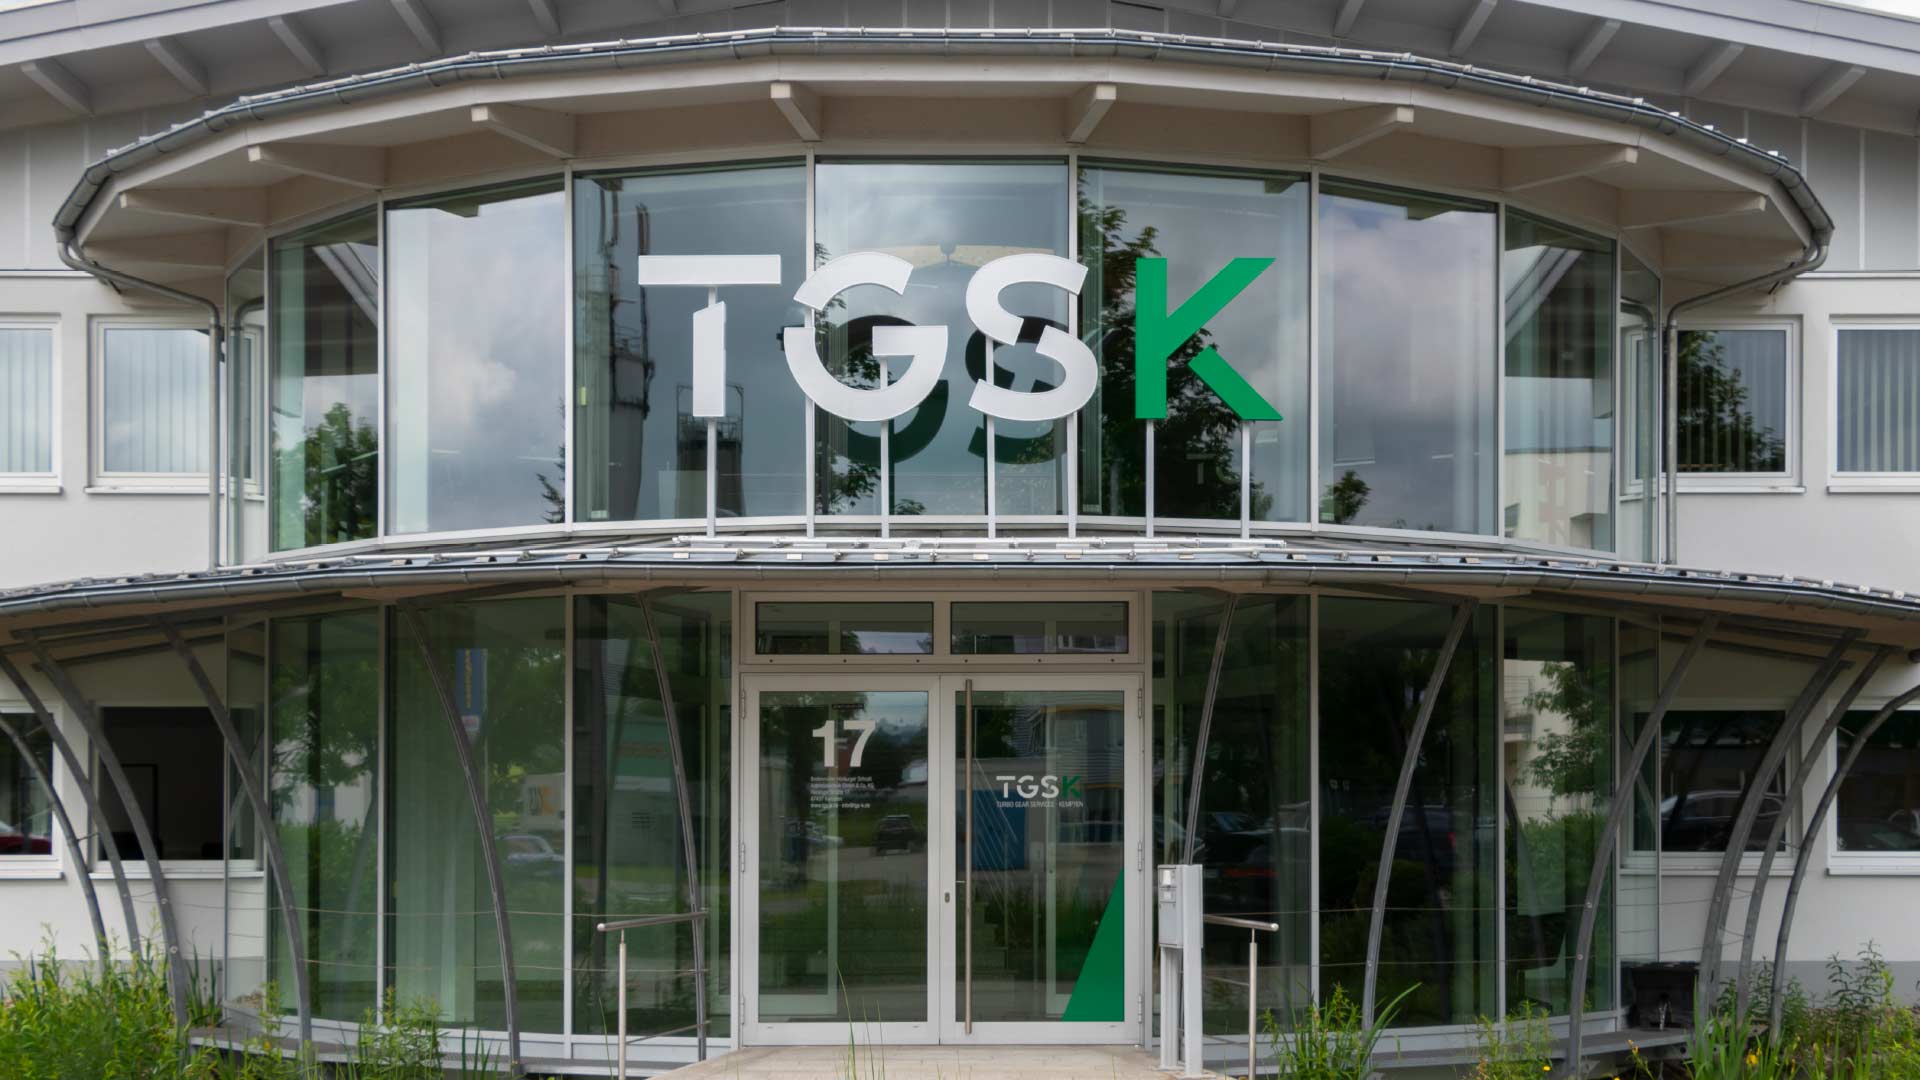 TGSK location in Kempten